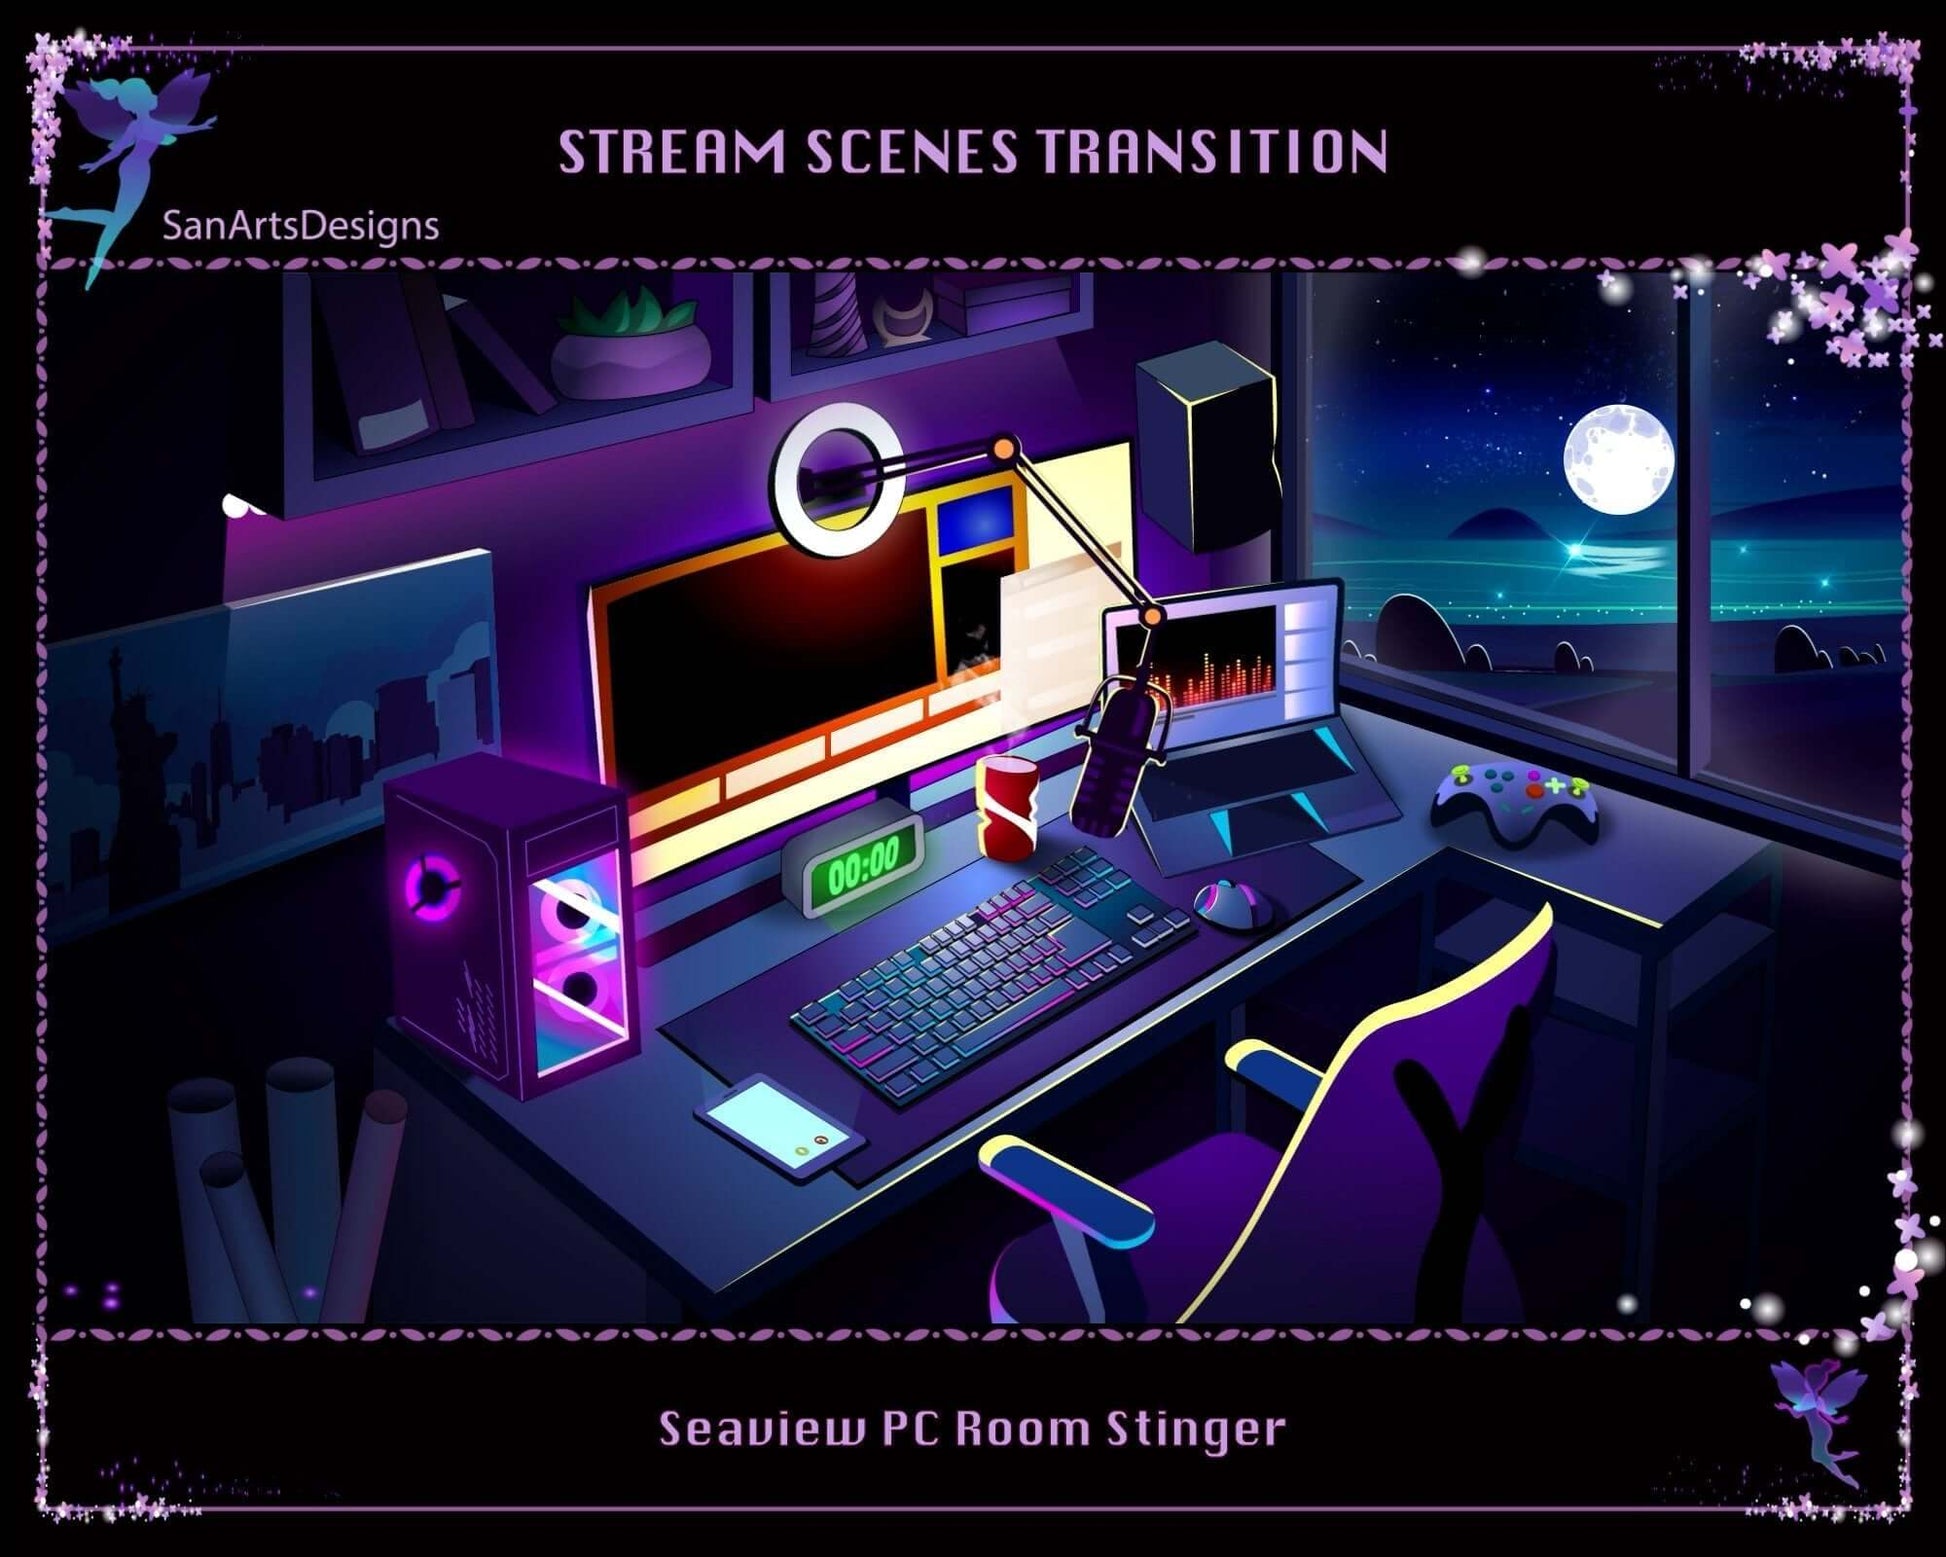 Seaview PC Room Twitch Stream Scenes Transition - Transition - Stream K-Arts